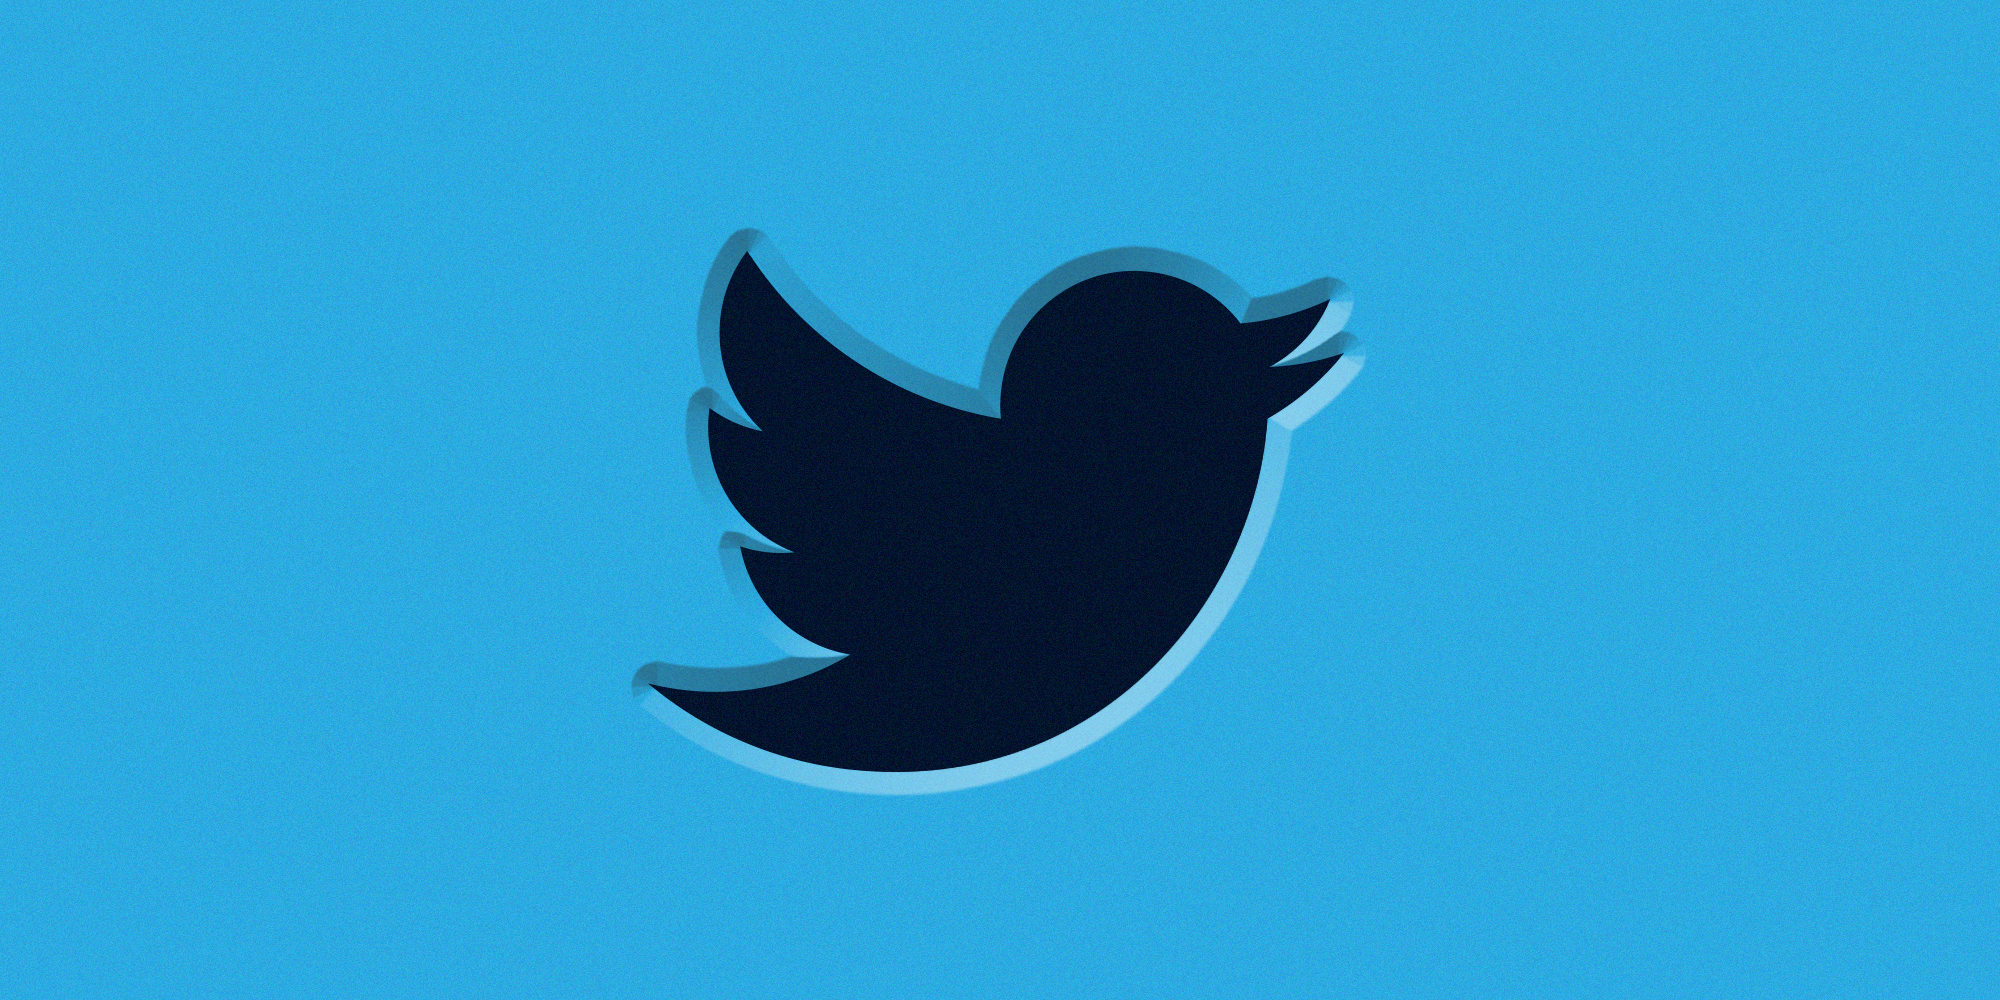 twitter wallpaper,logo,wing,illustration,graphics,silhouette